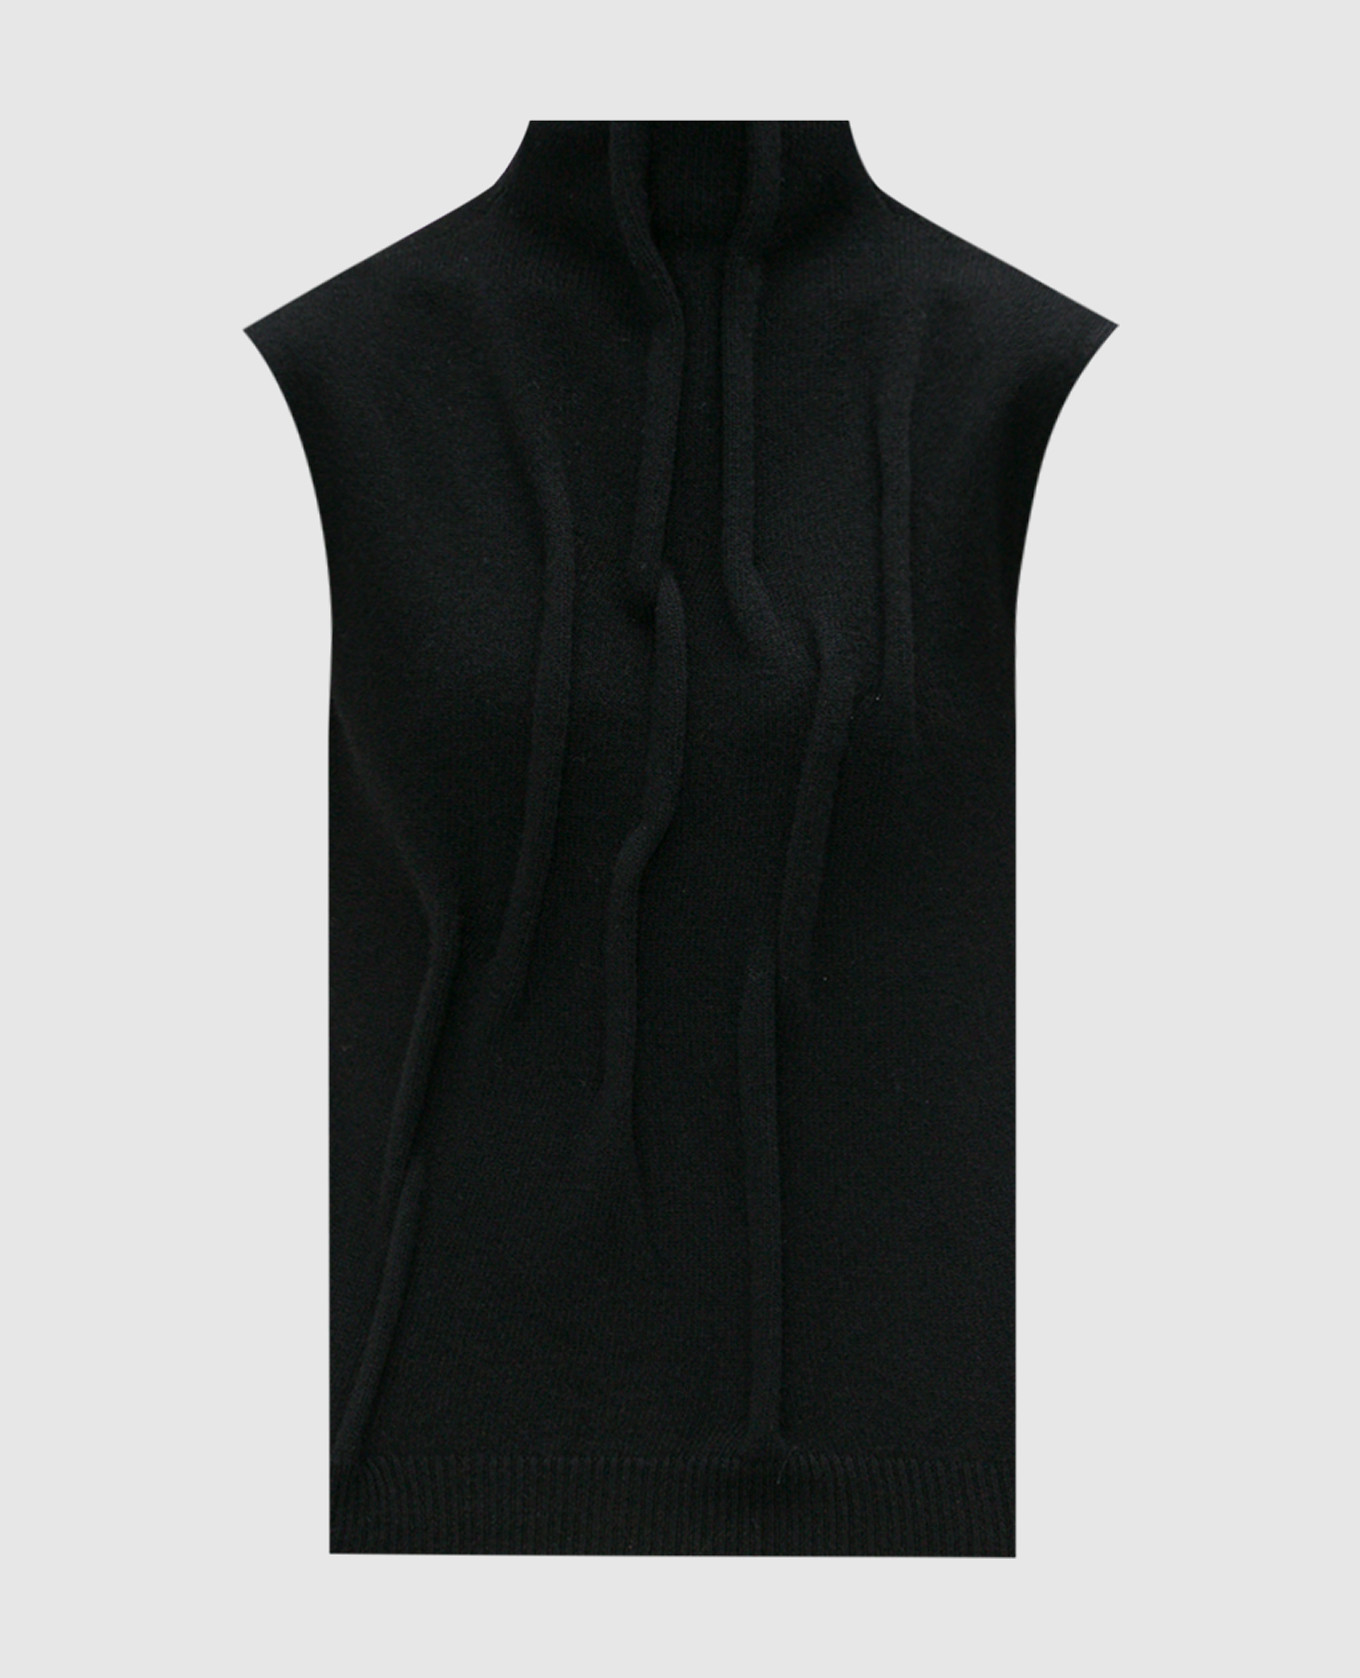 Black vest made of wool